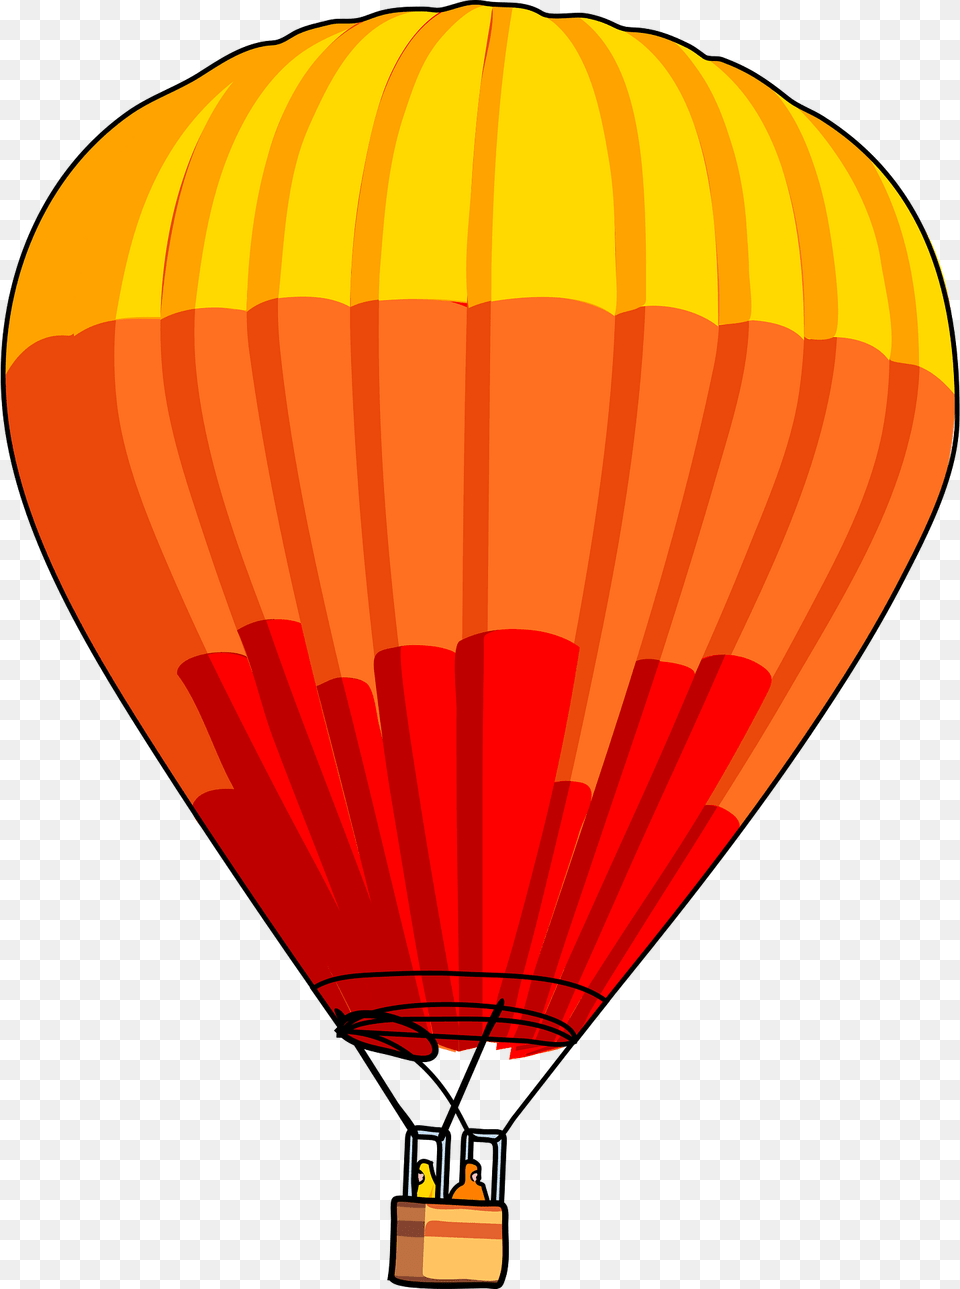 Red Orange And Yellow Hot Air Balloon Clipart, Aircraft, Hot Air Balloon, Transportation, Vehicle Png